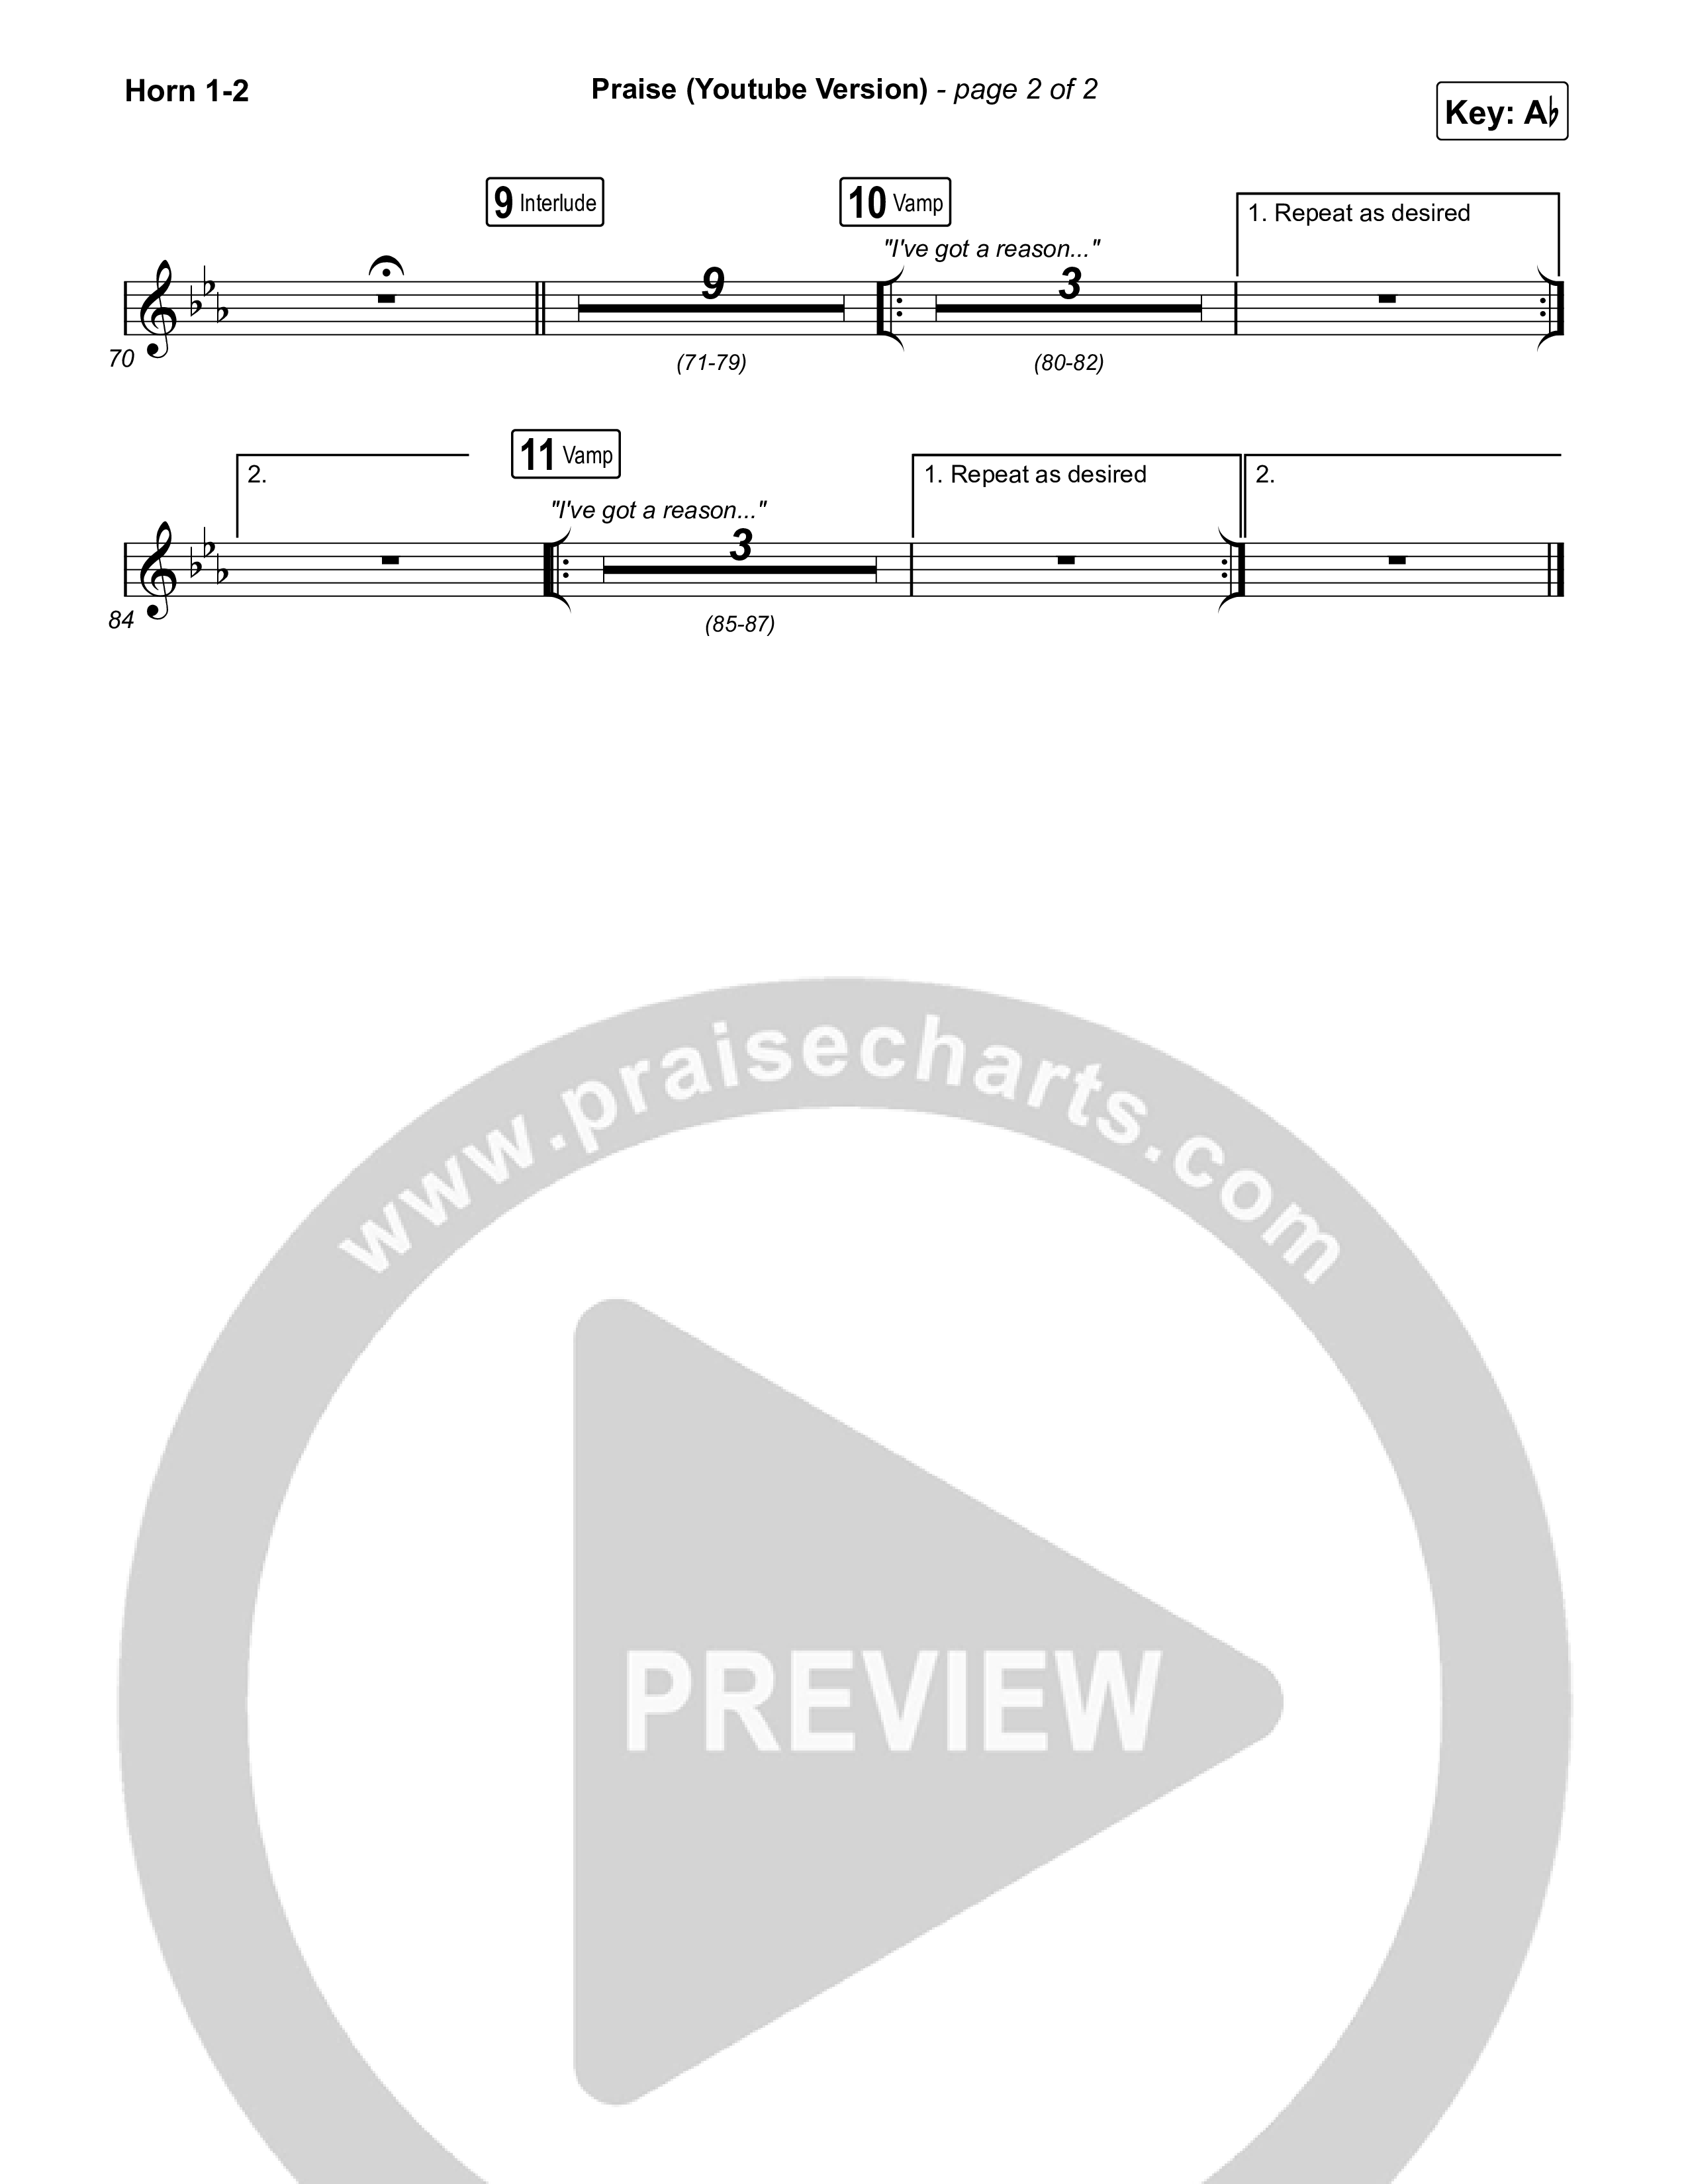 Praise French Horn 1,2 (Elevation Worship / Elevation Choir)